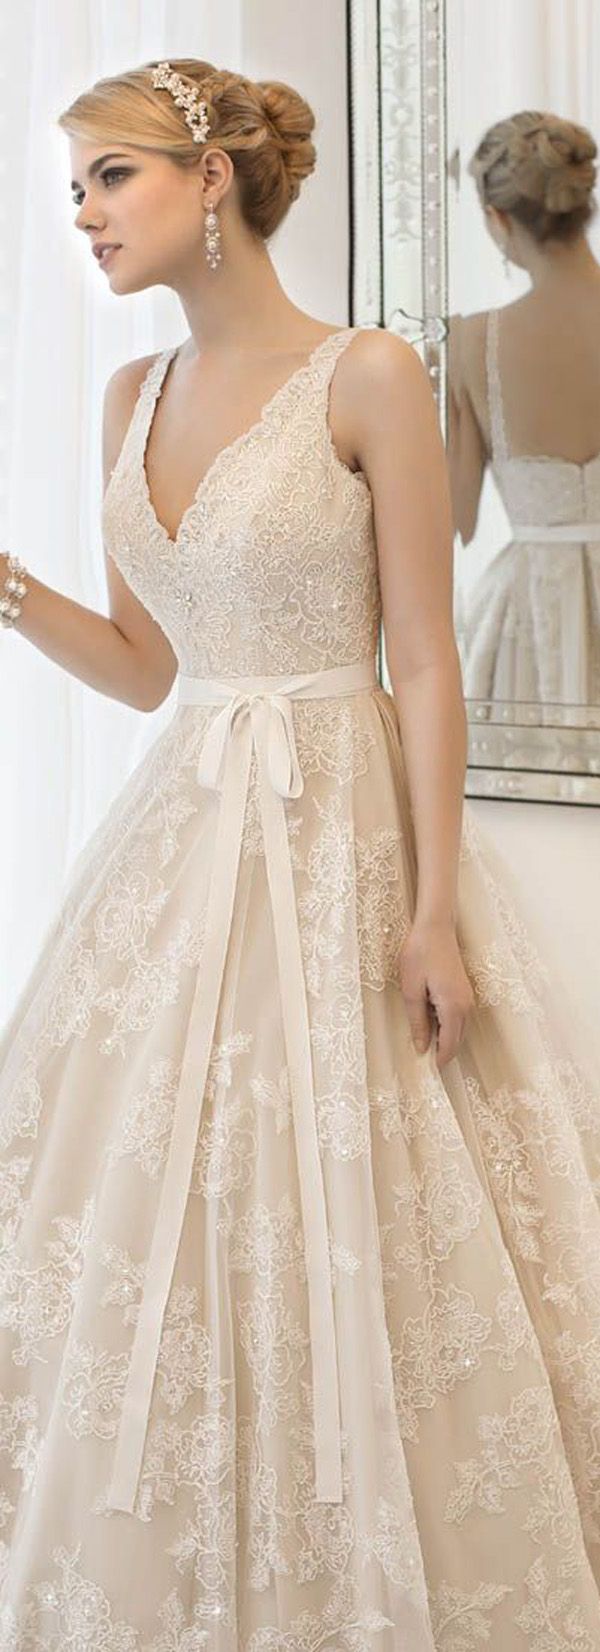 25 Stunning Lace Wedding Dresses Ideas Wohh Wedding 8460